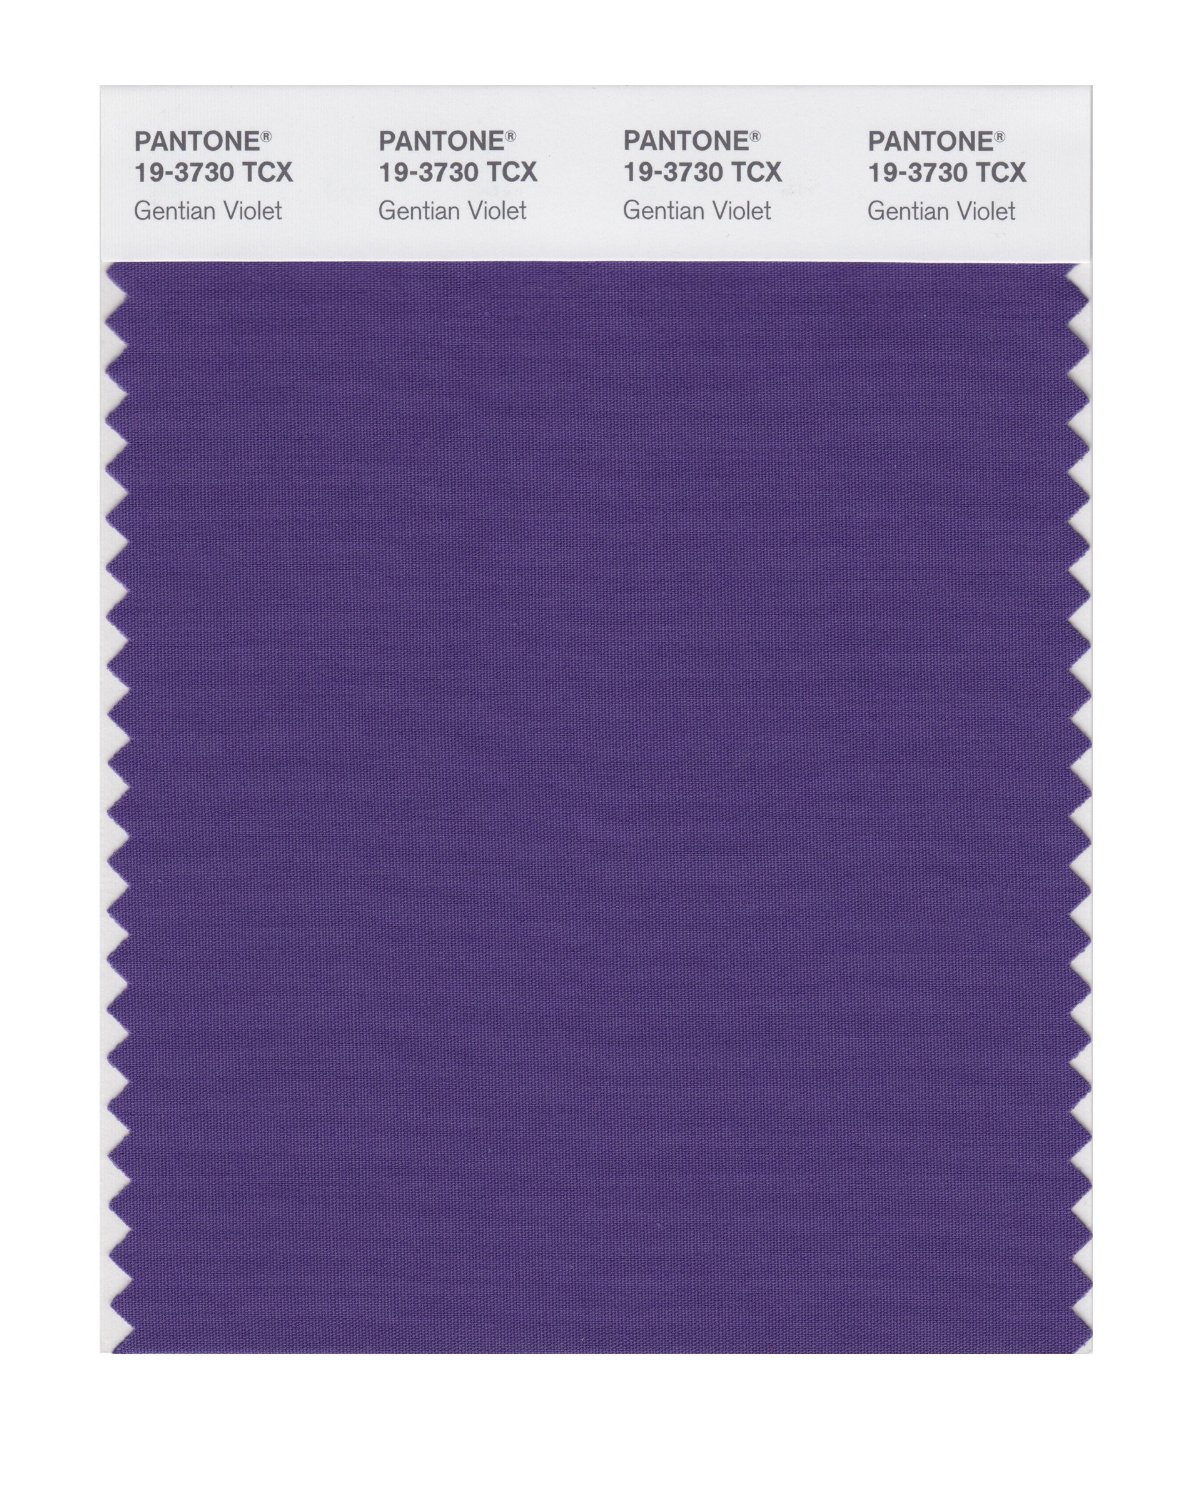 Pantone Cotton Swatch 19-3730 Gentian Violet